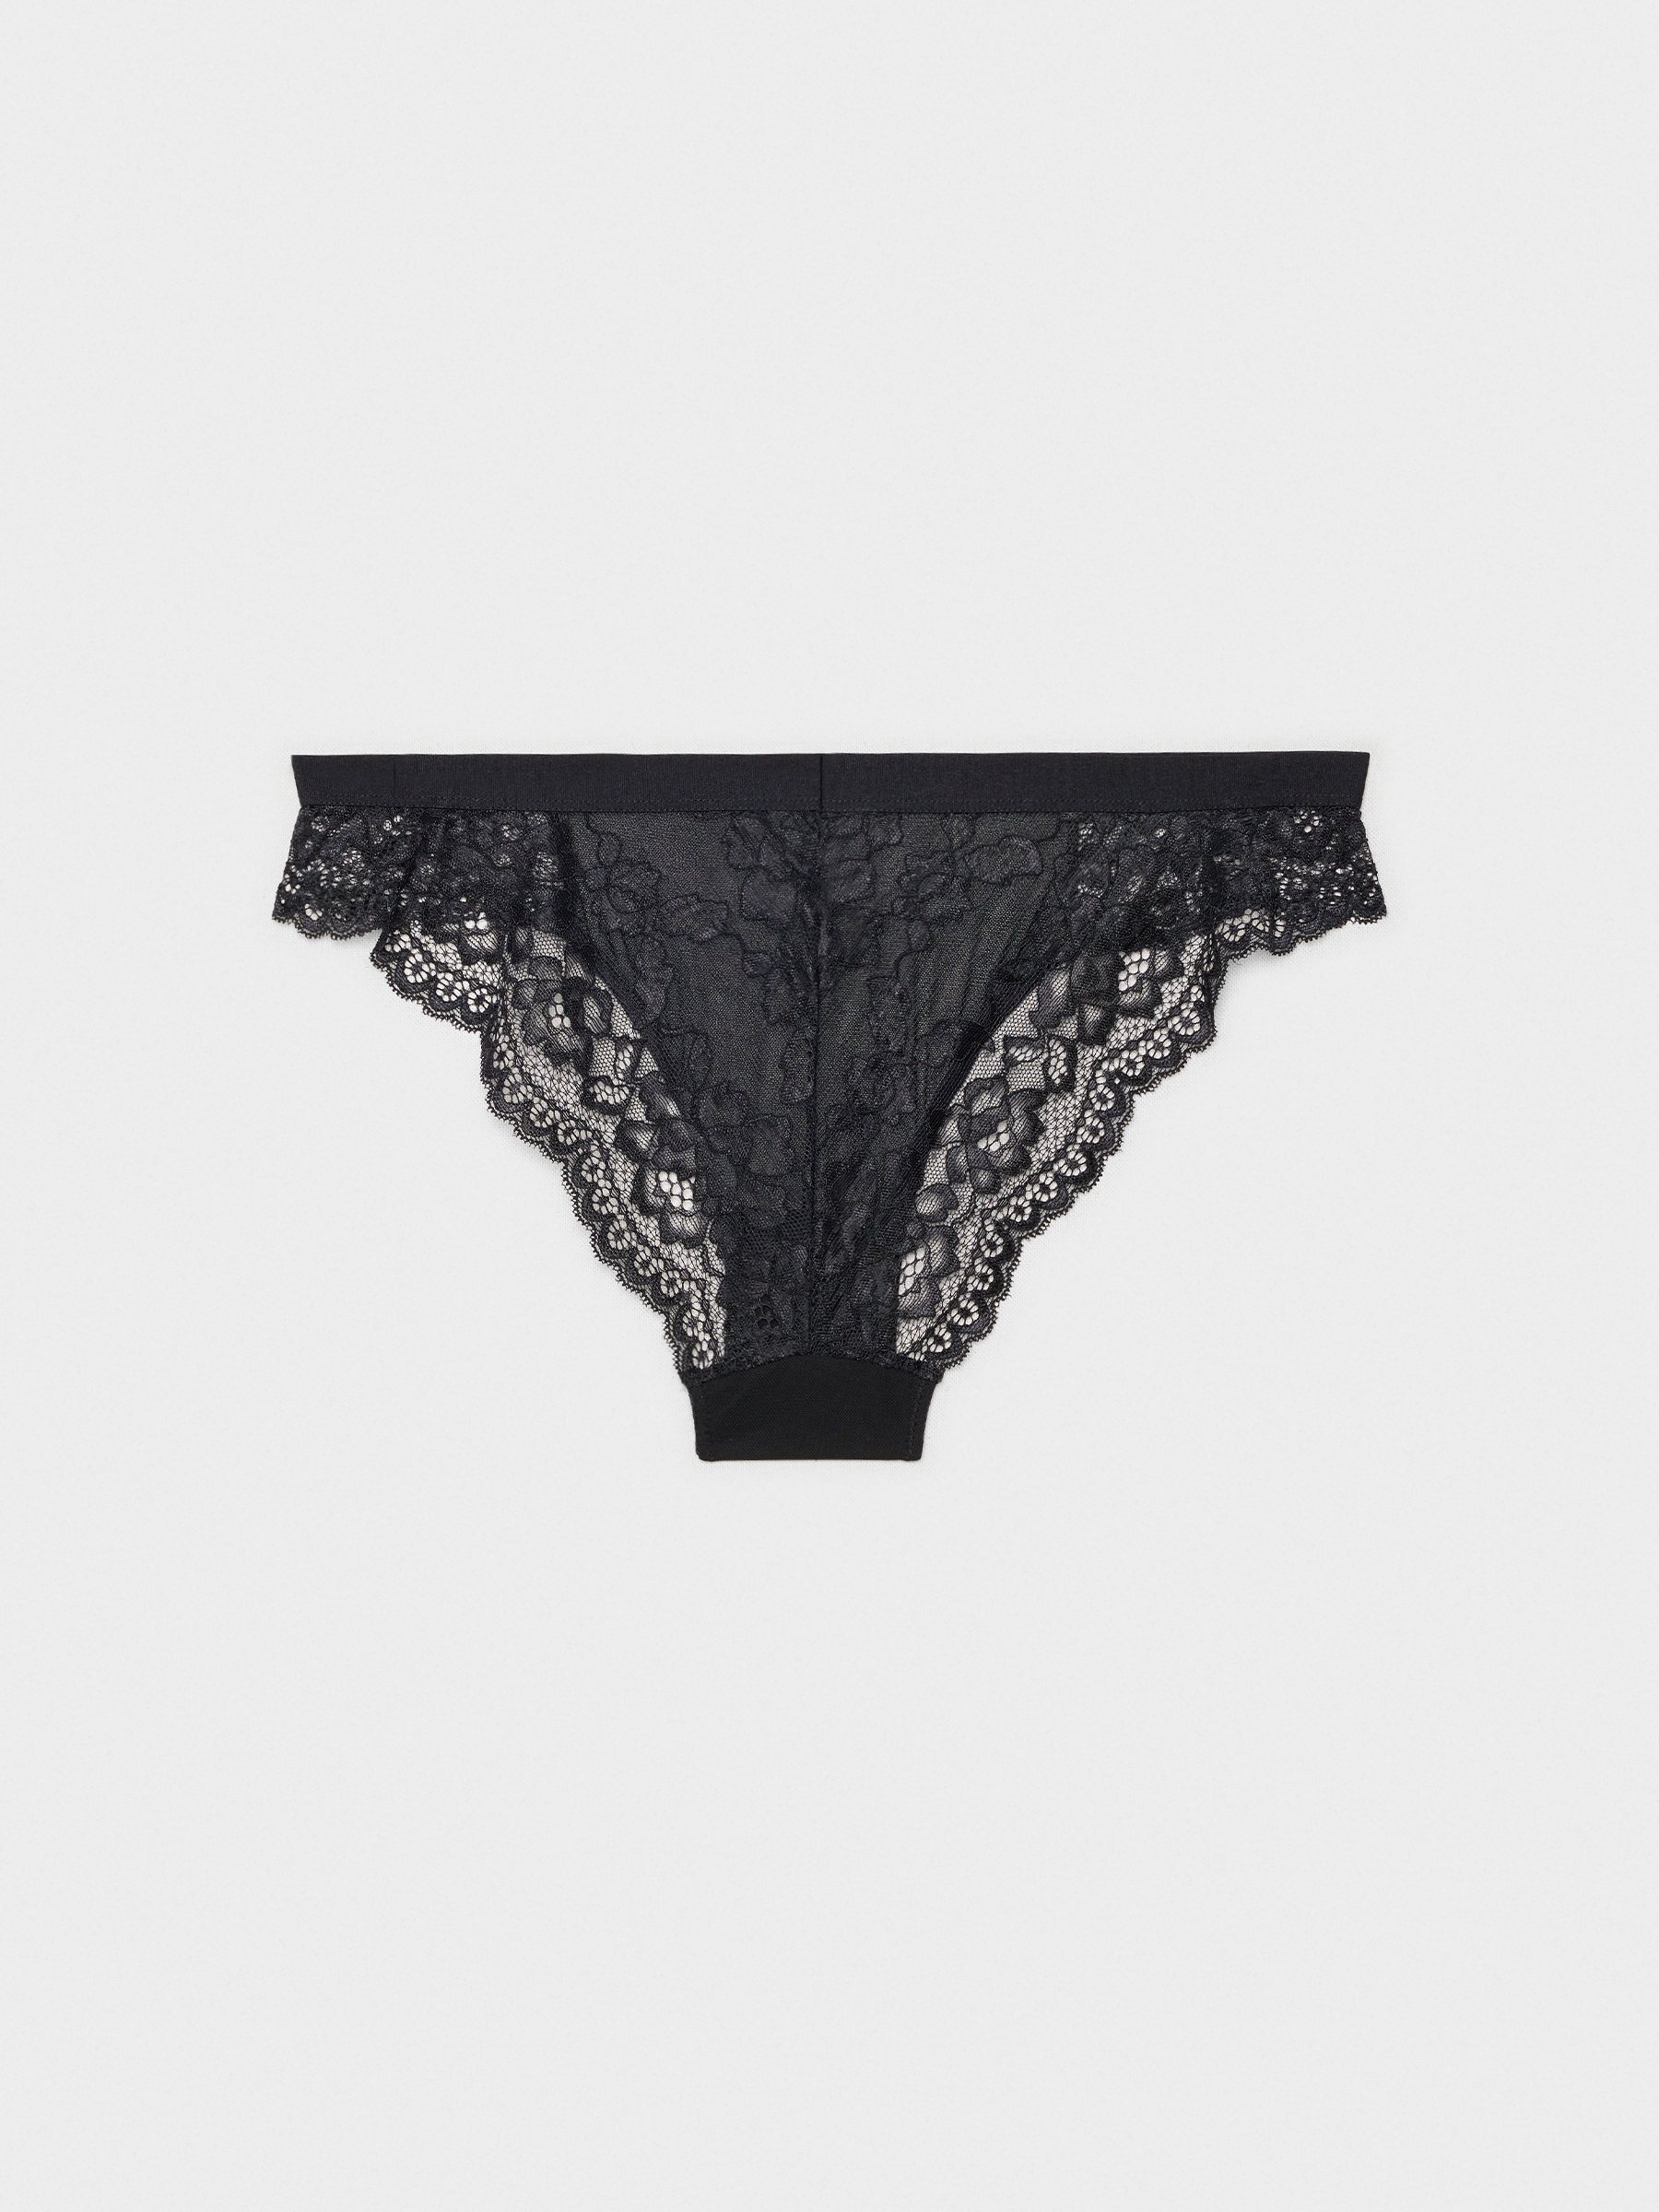 https://inside-shops.com/324432/classic-black-lace-panty.jpg